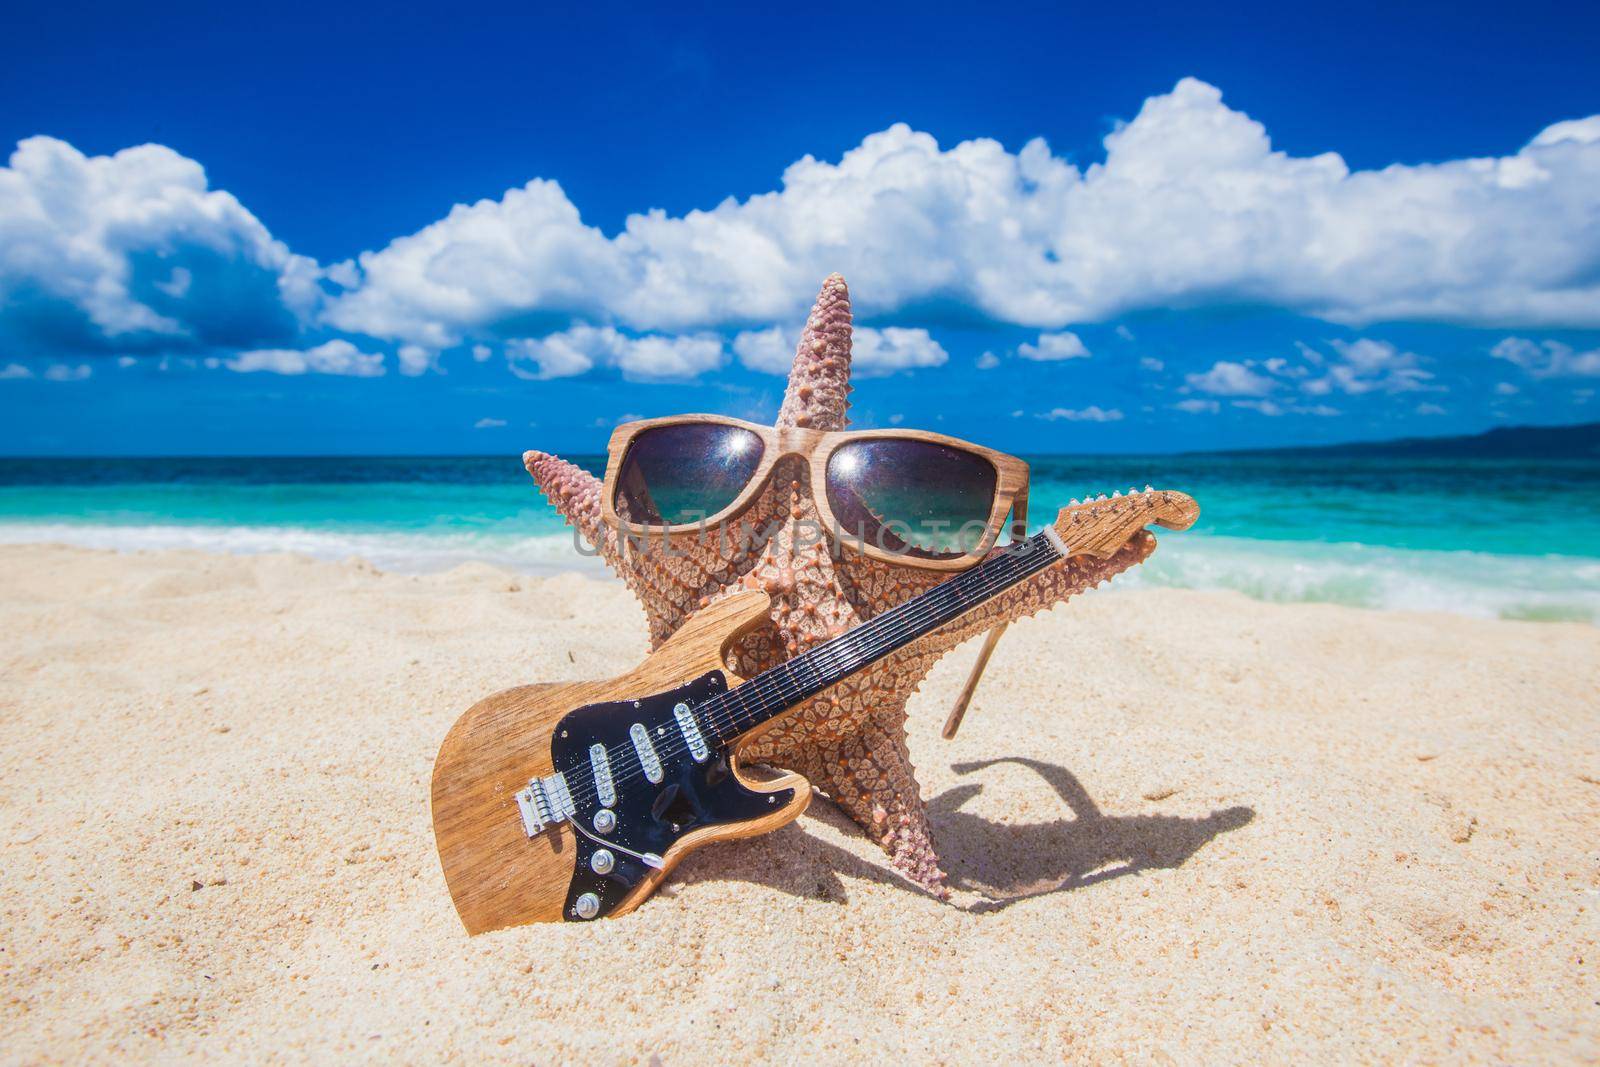 Starfish guitar player on beach by Yellowj